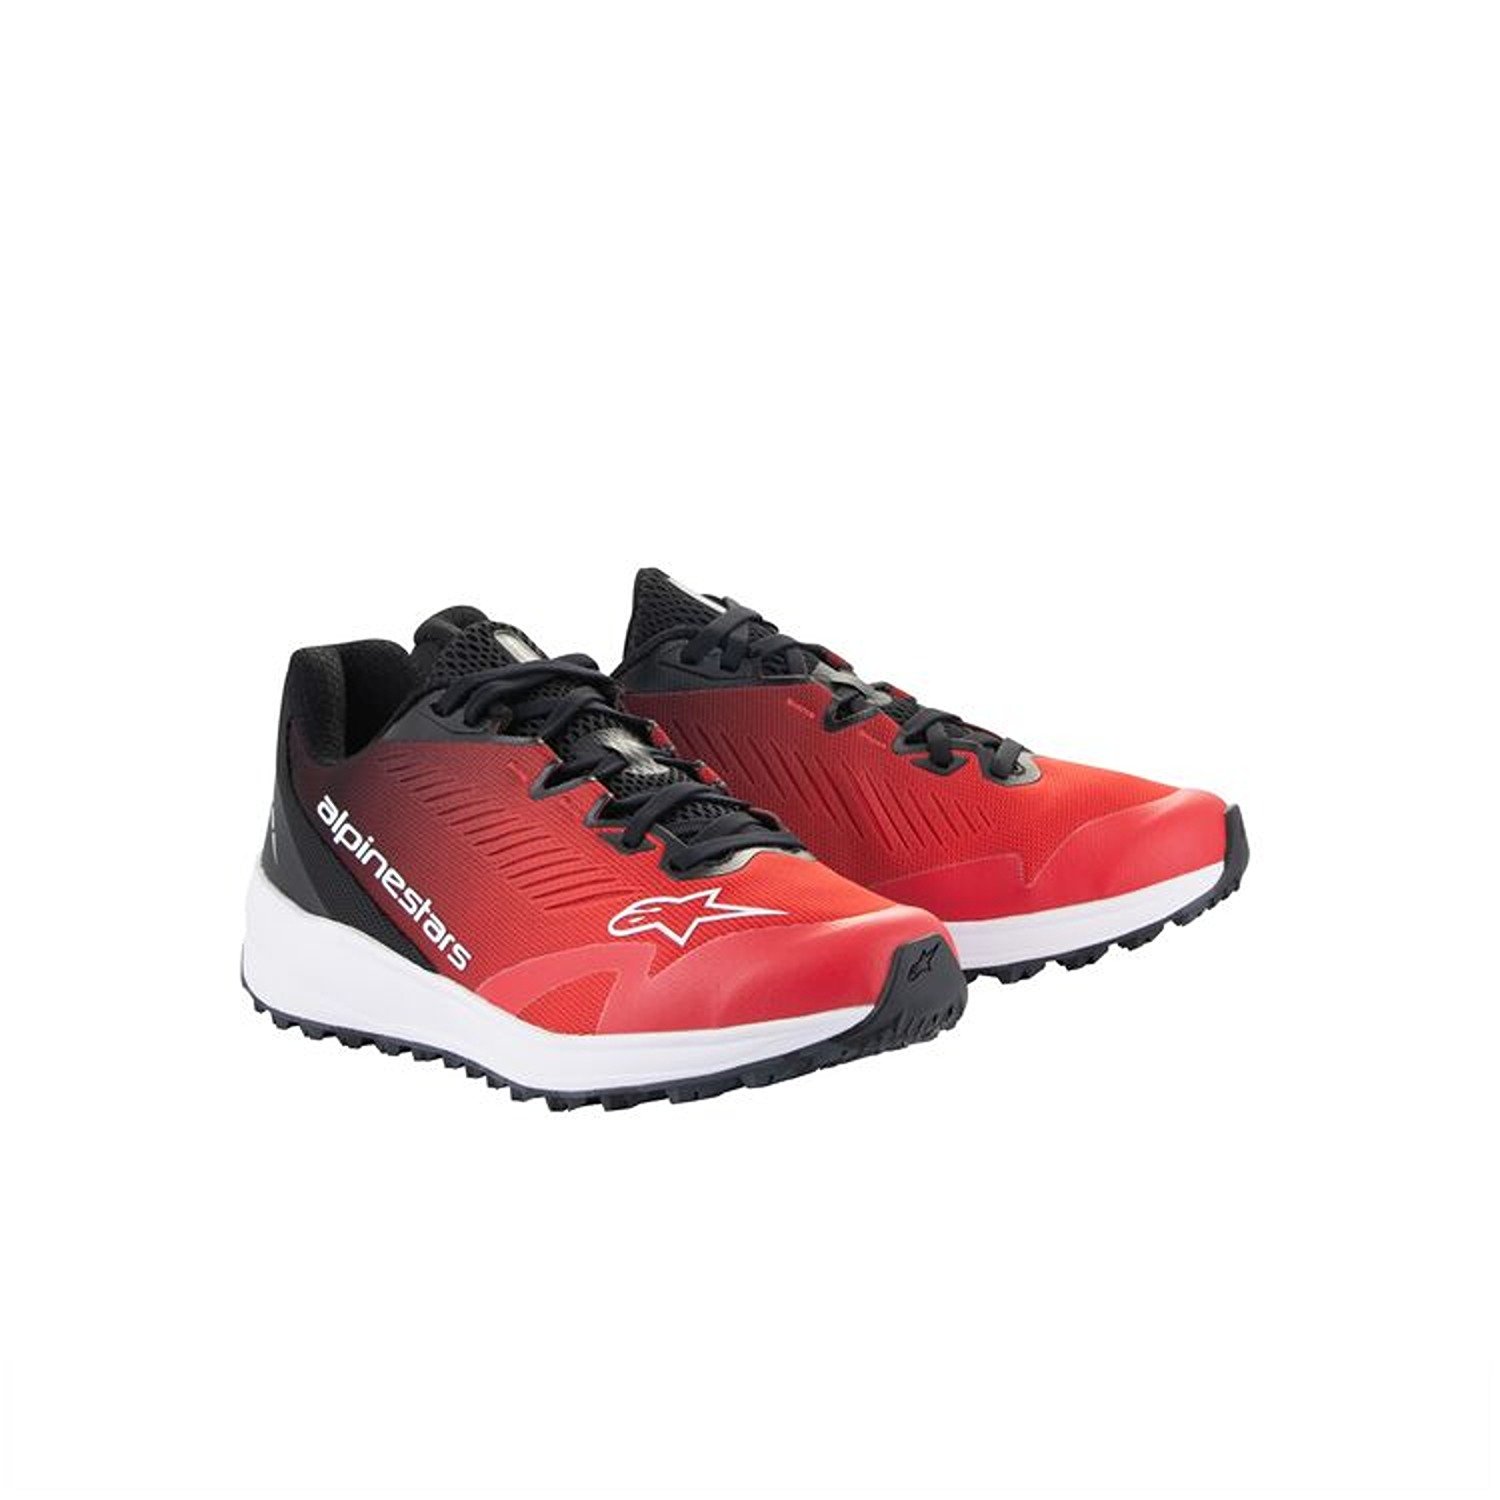 Image of Alpinestars Meta Road V2 Shoes Red Black White Size US 95 EN